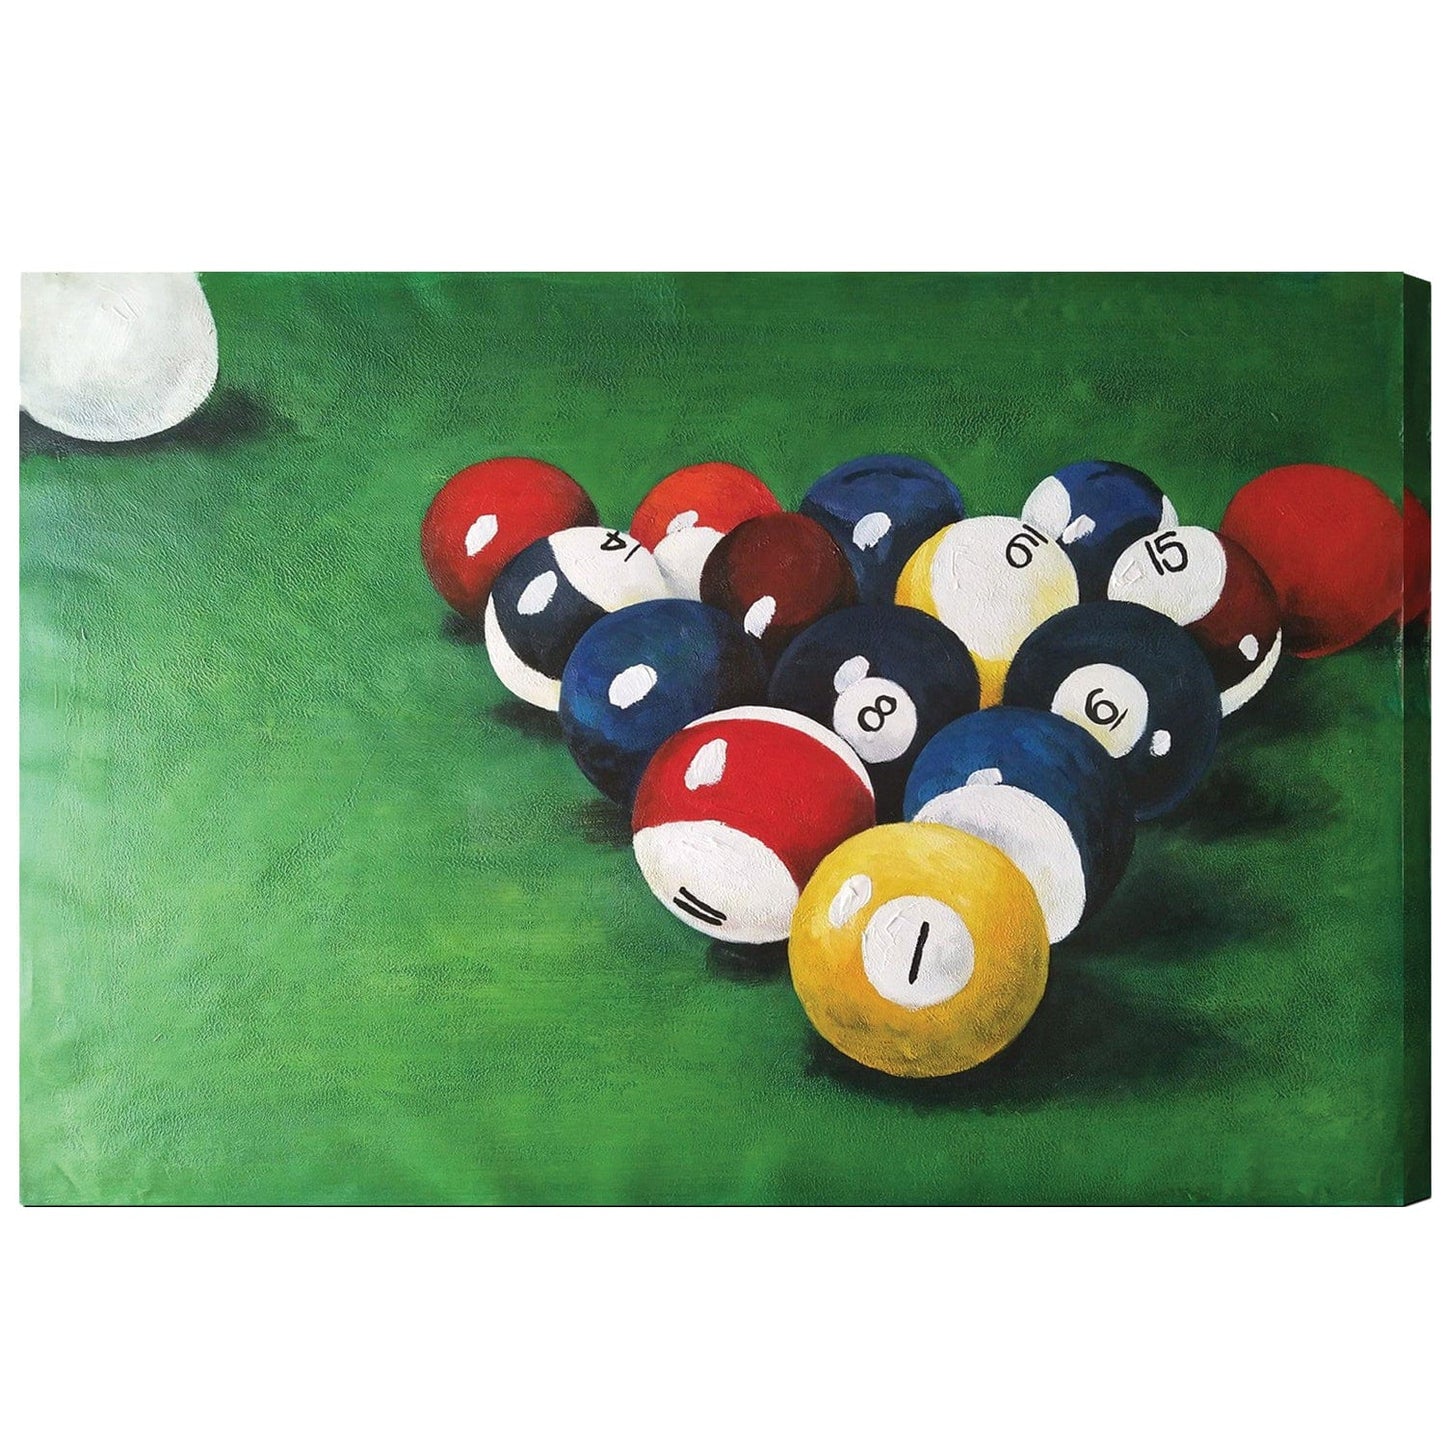 RAM Game Room Ram Game Room Oil Painting On Canvas - Racked Billiard Balls